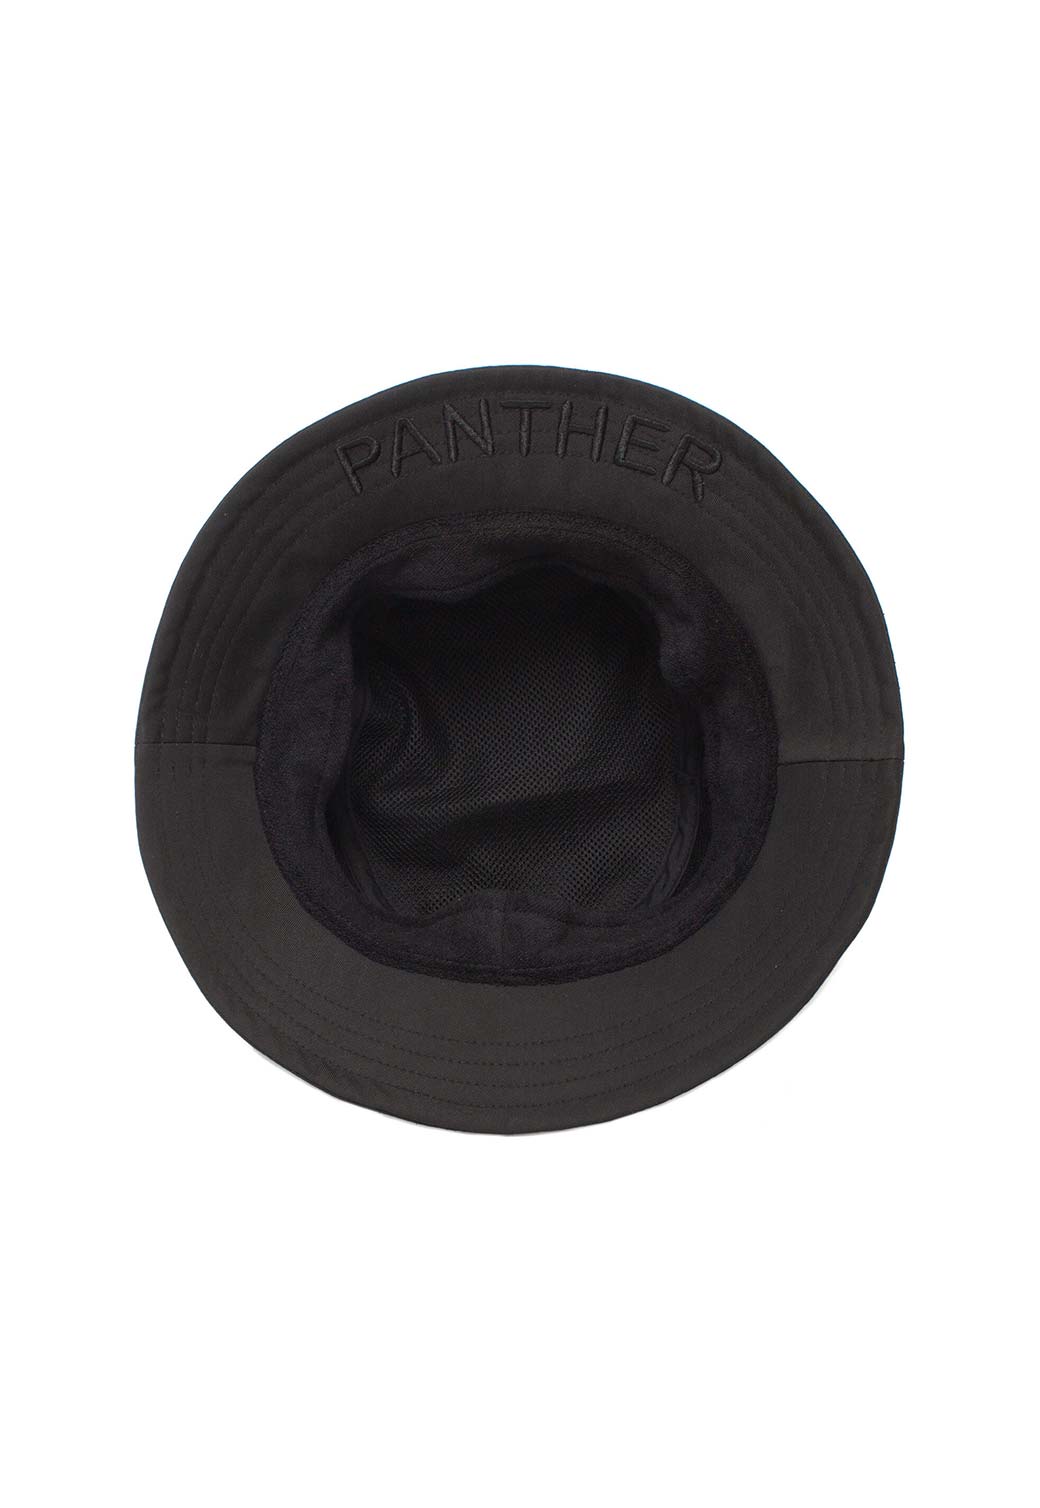 Dark Slate Gray כובע טמבל Bucktown Panther GOORIN